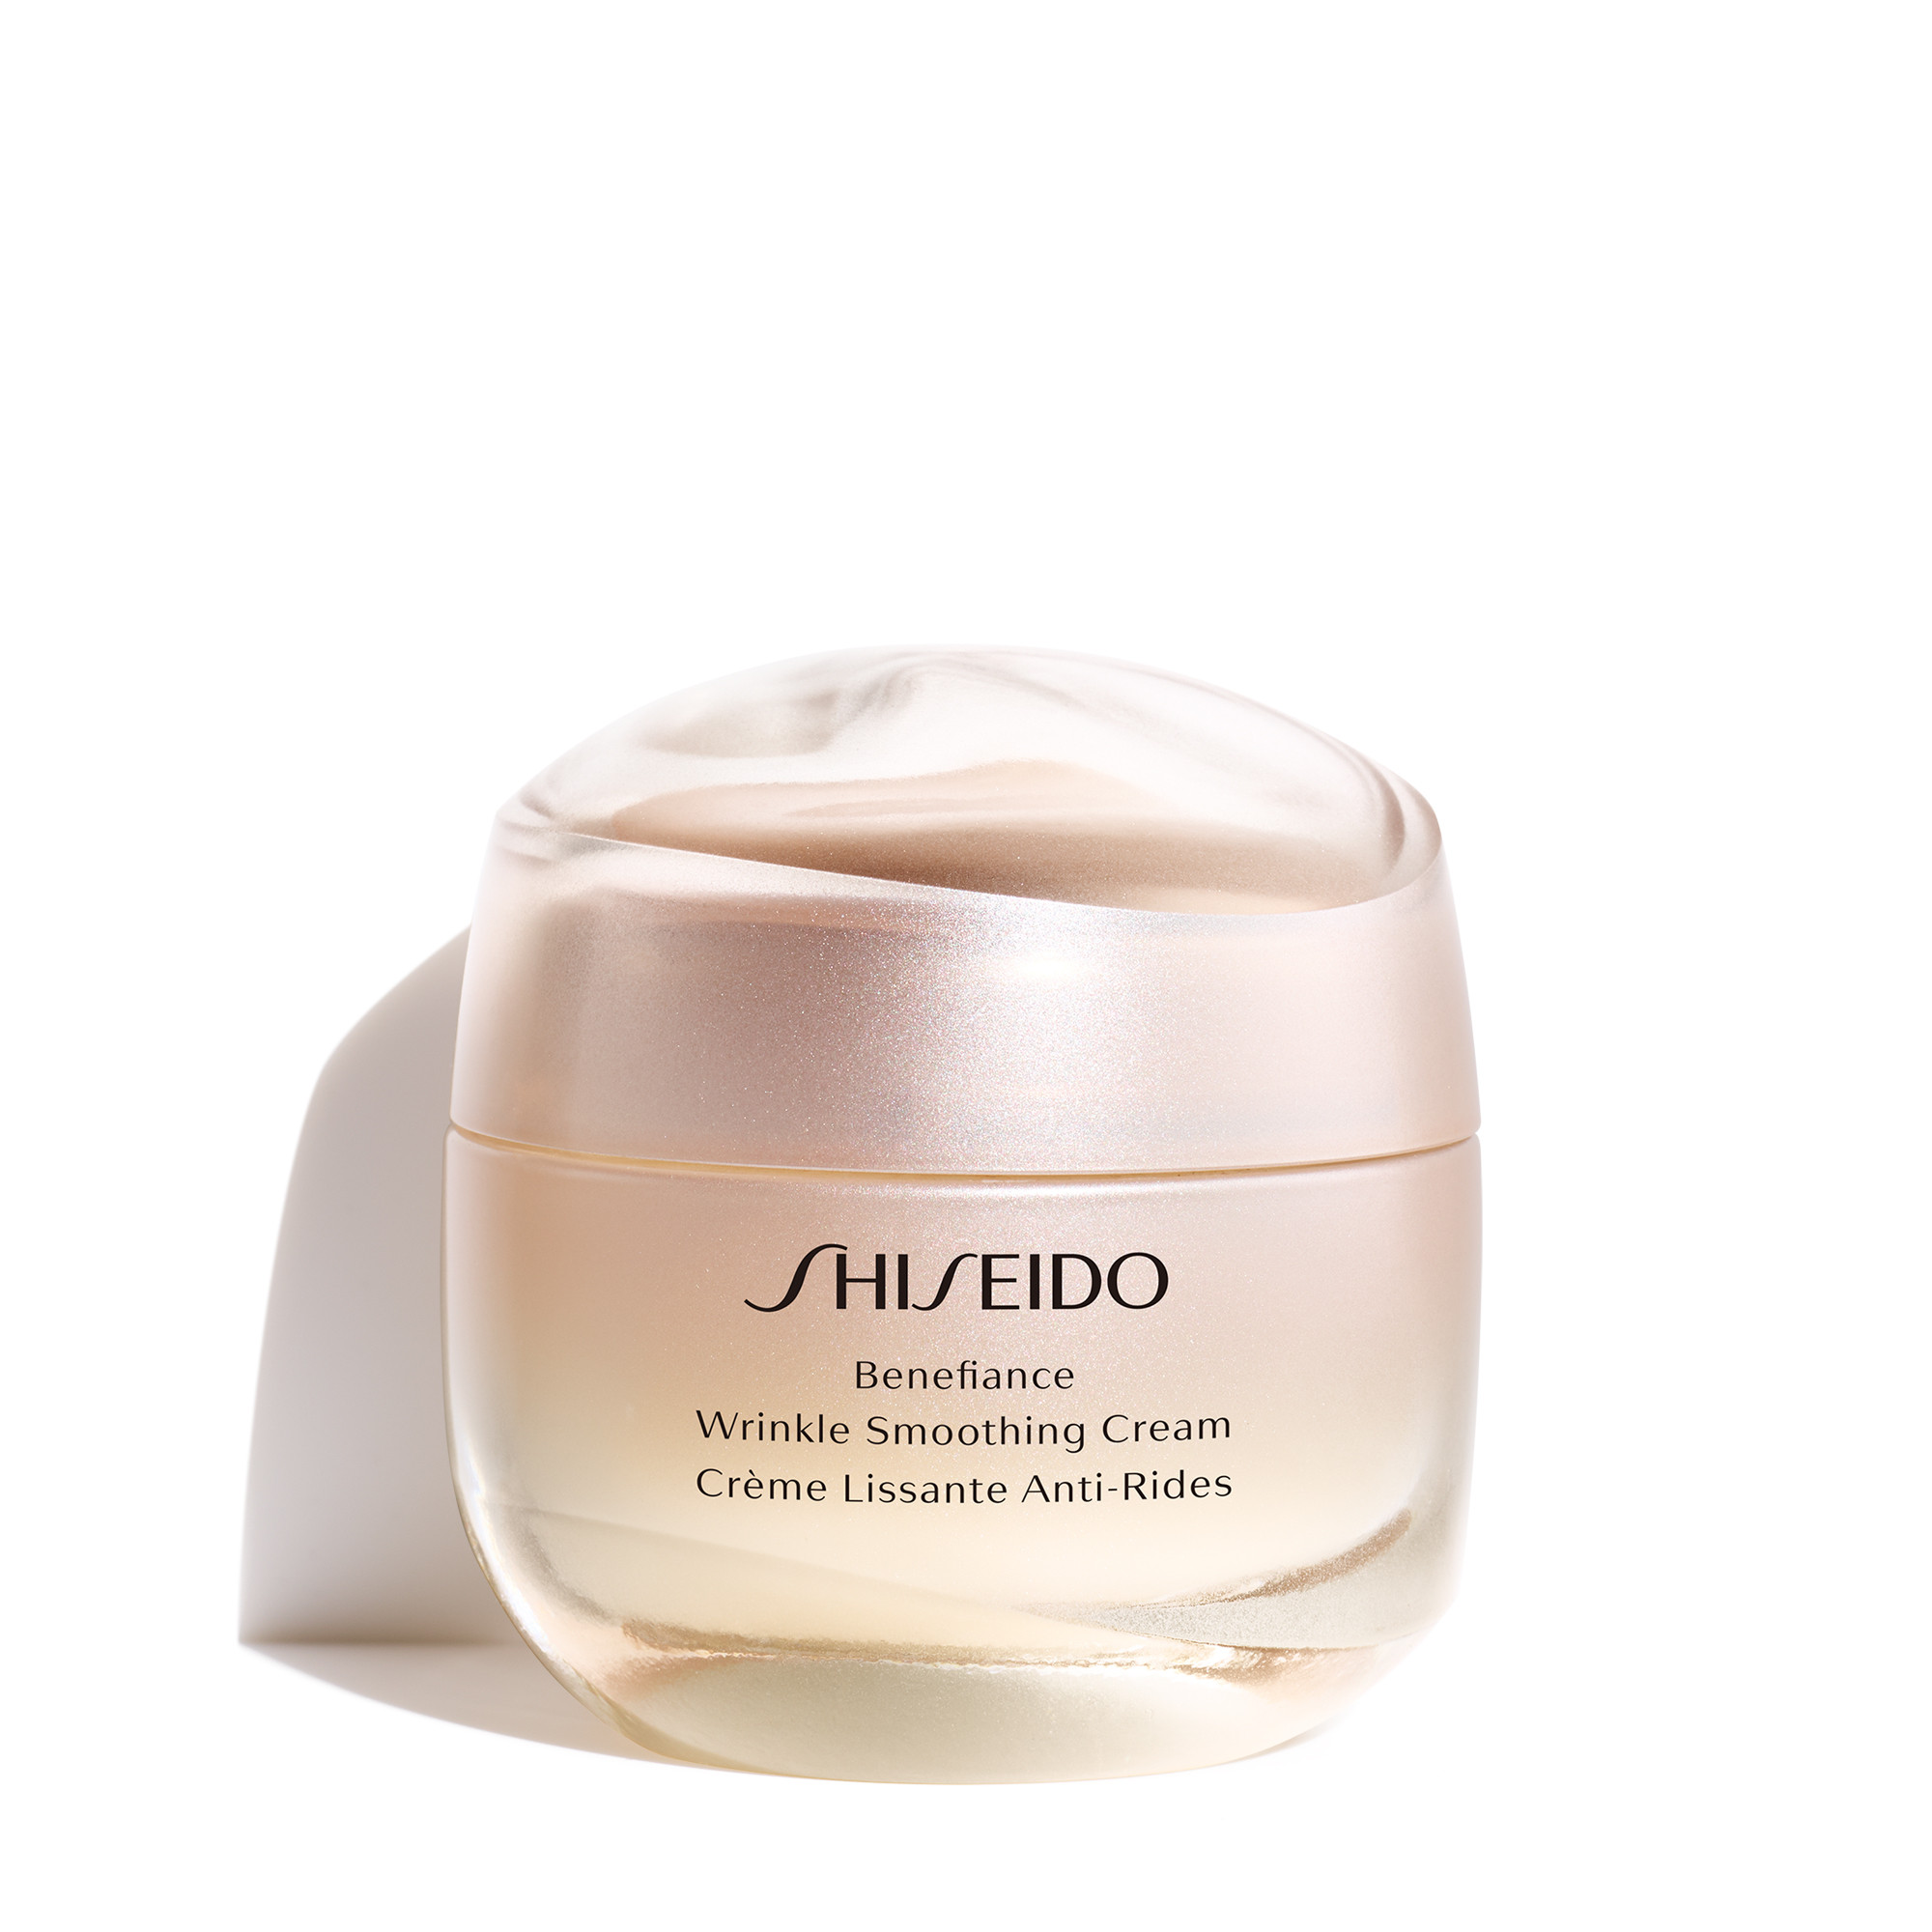 Shiseido VitalPerfection Sculpting Lift Cream 50ml/1.7oz, 50ml/1.7oz -  Smith's Food and Drug